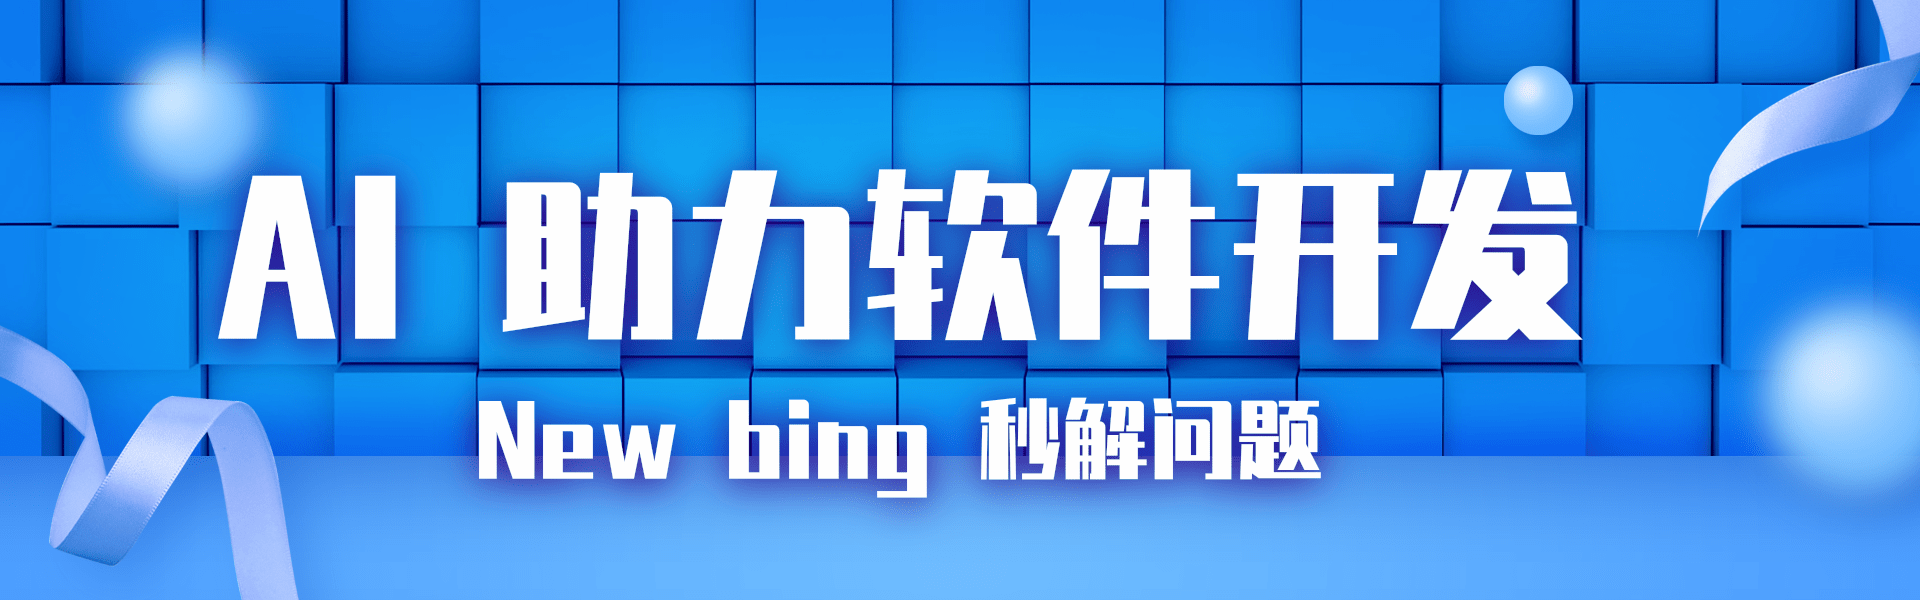 New bing 秒解问题.png